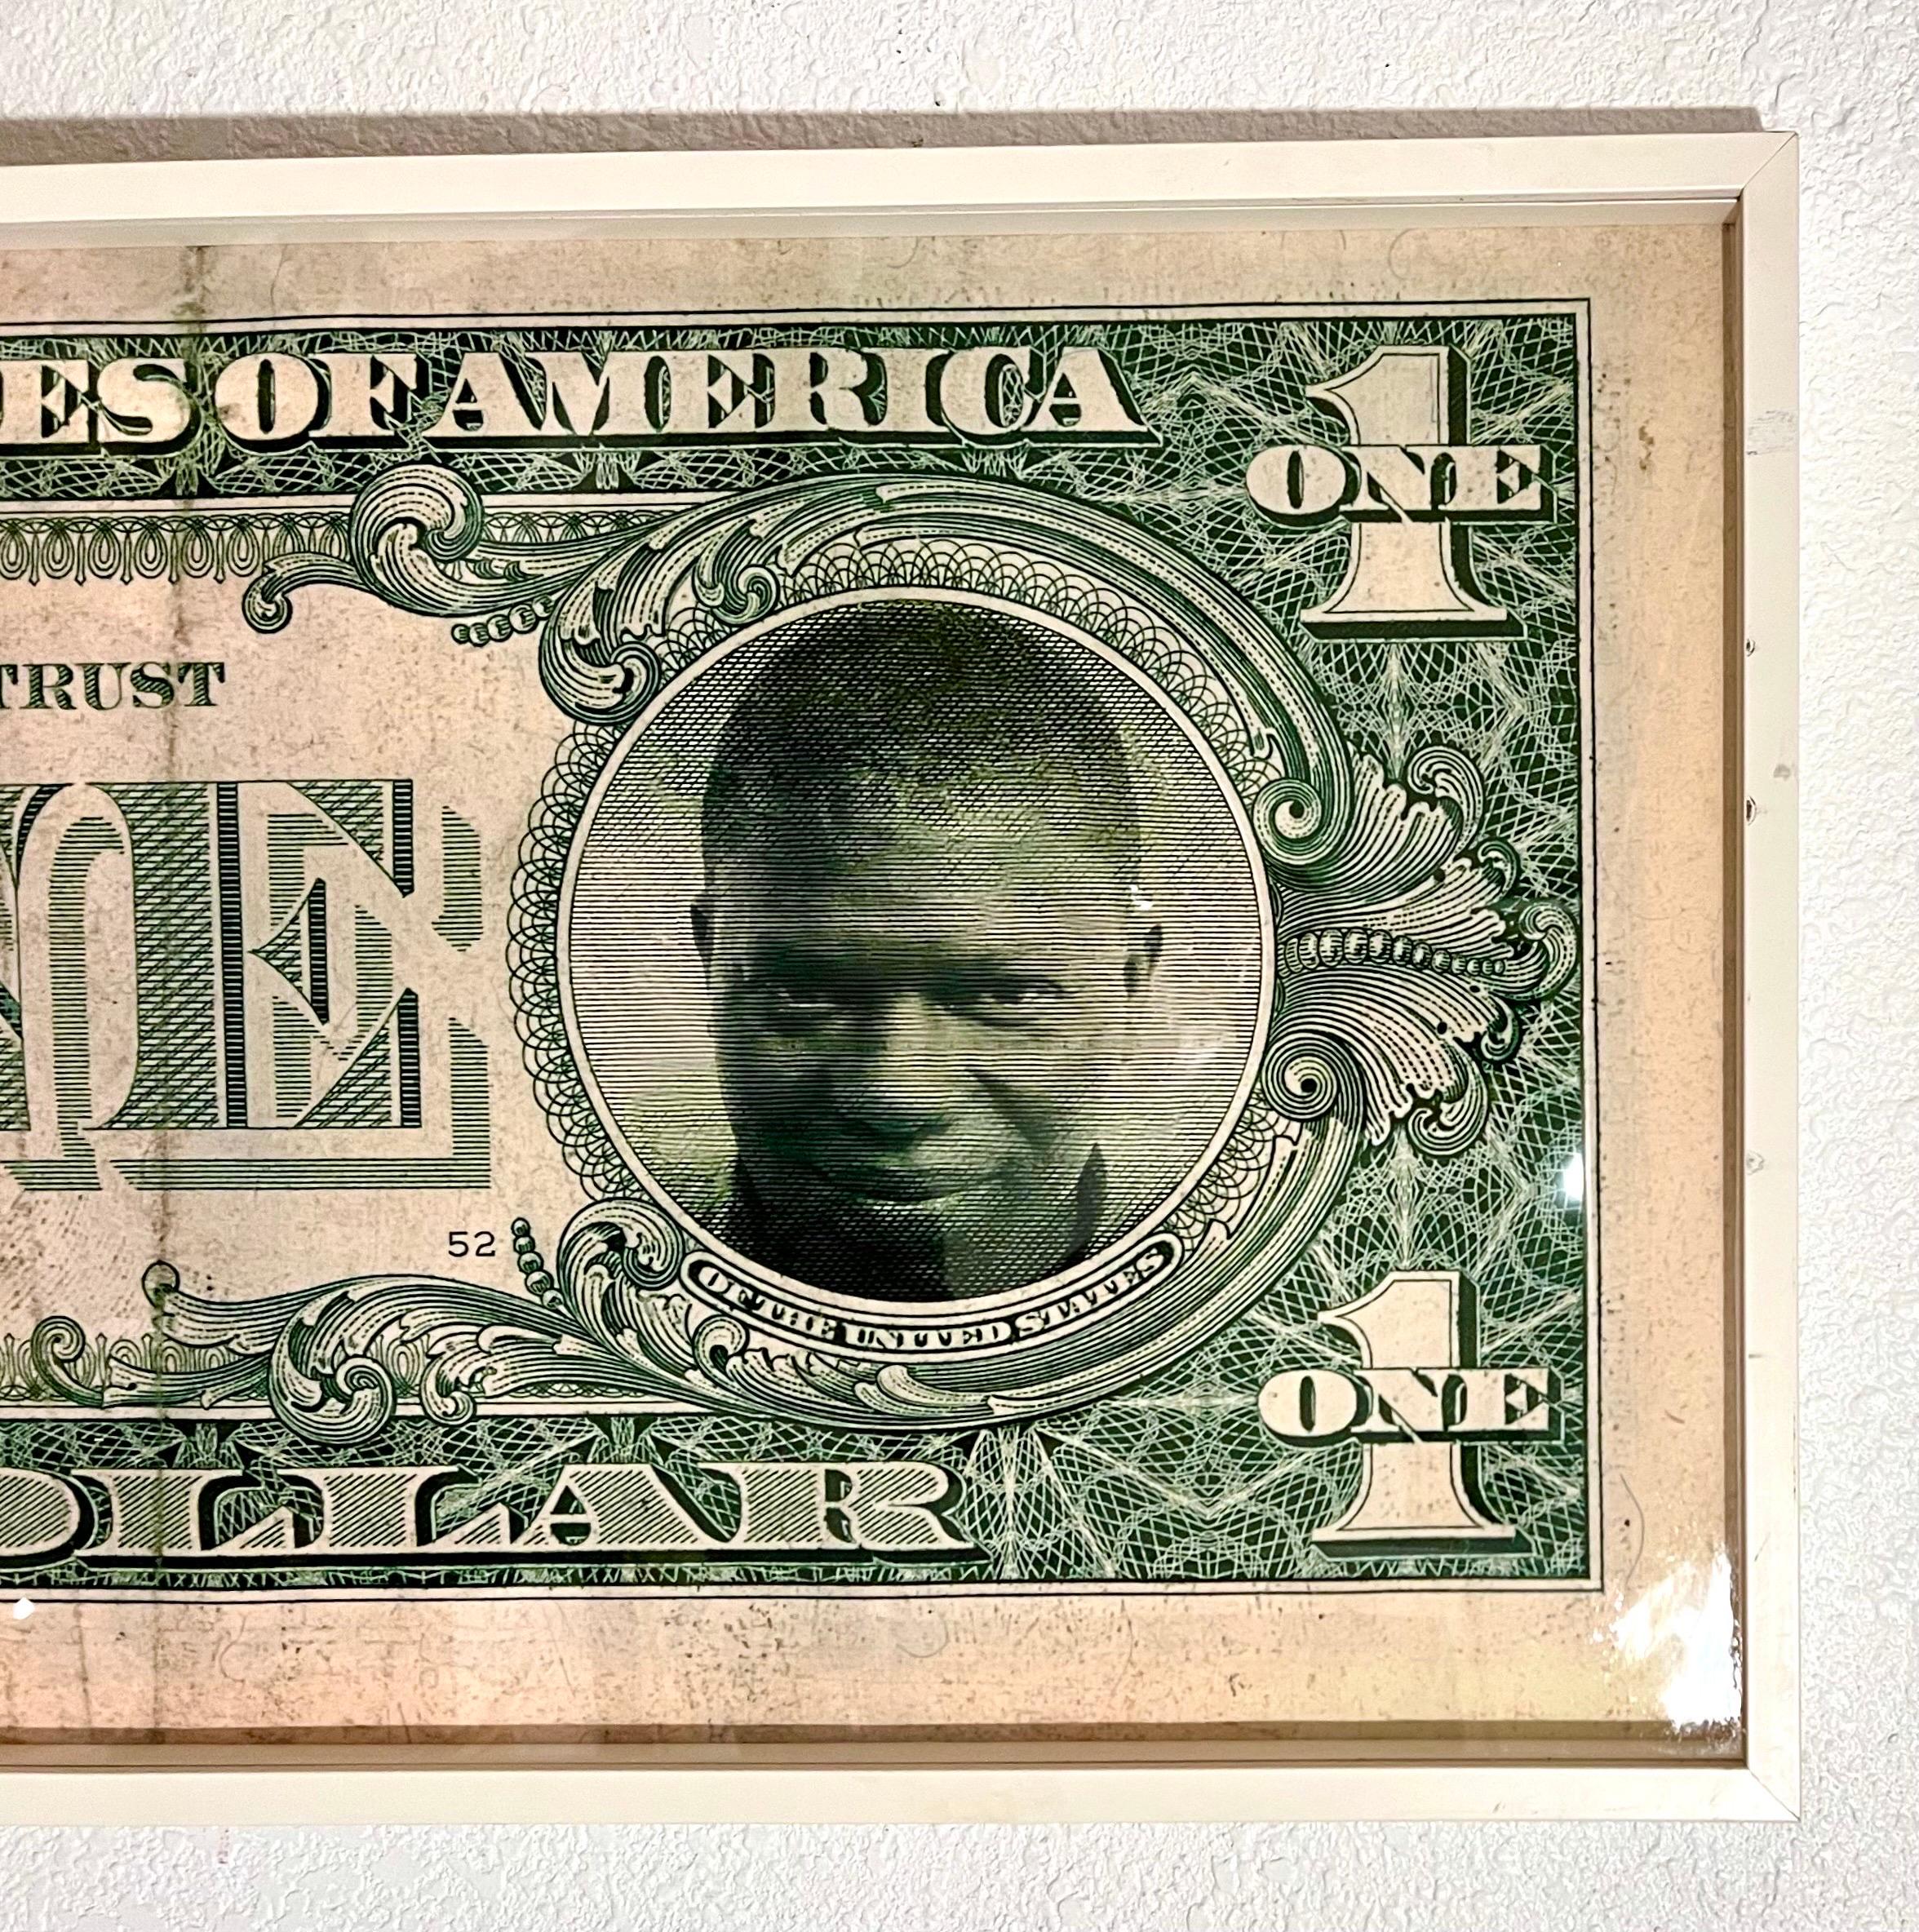 Meschac Gaba - Photographie à jet d'encre pigmentaire - Art conceptuel africain Dollar Bill en vente 7